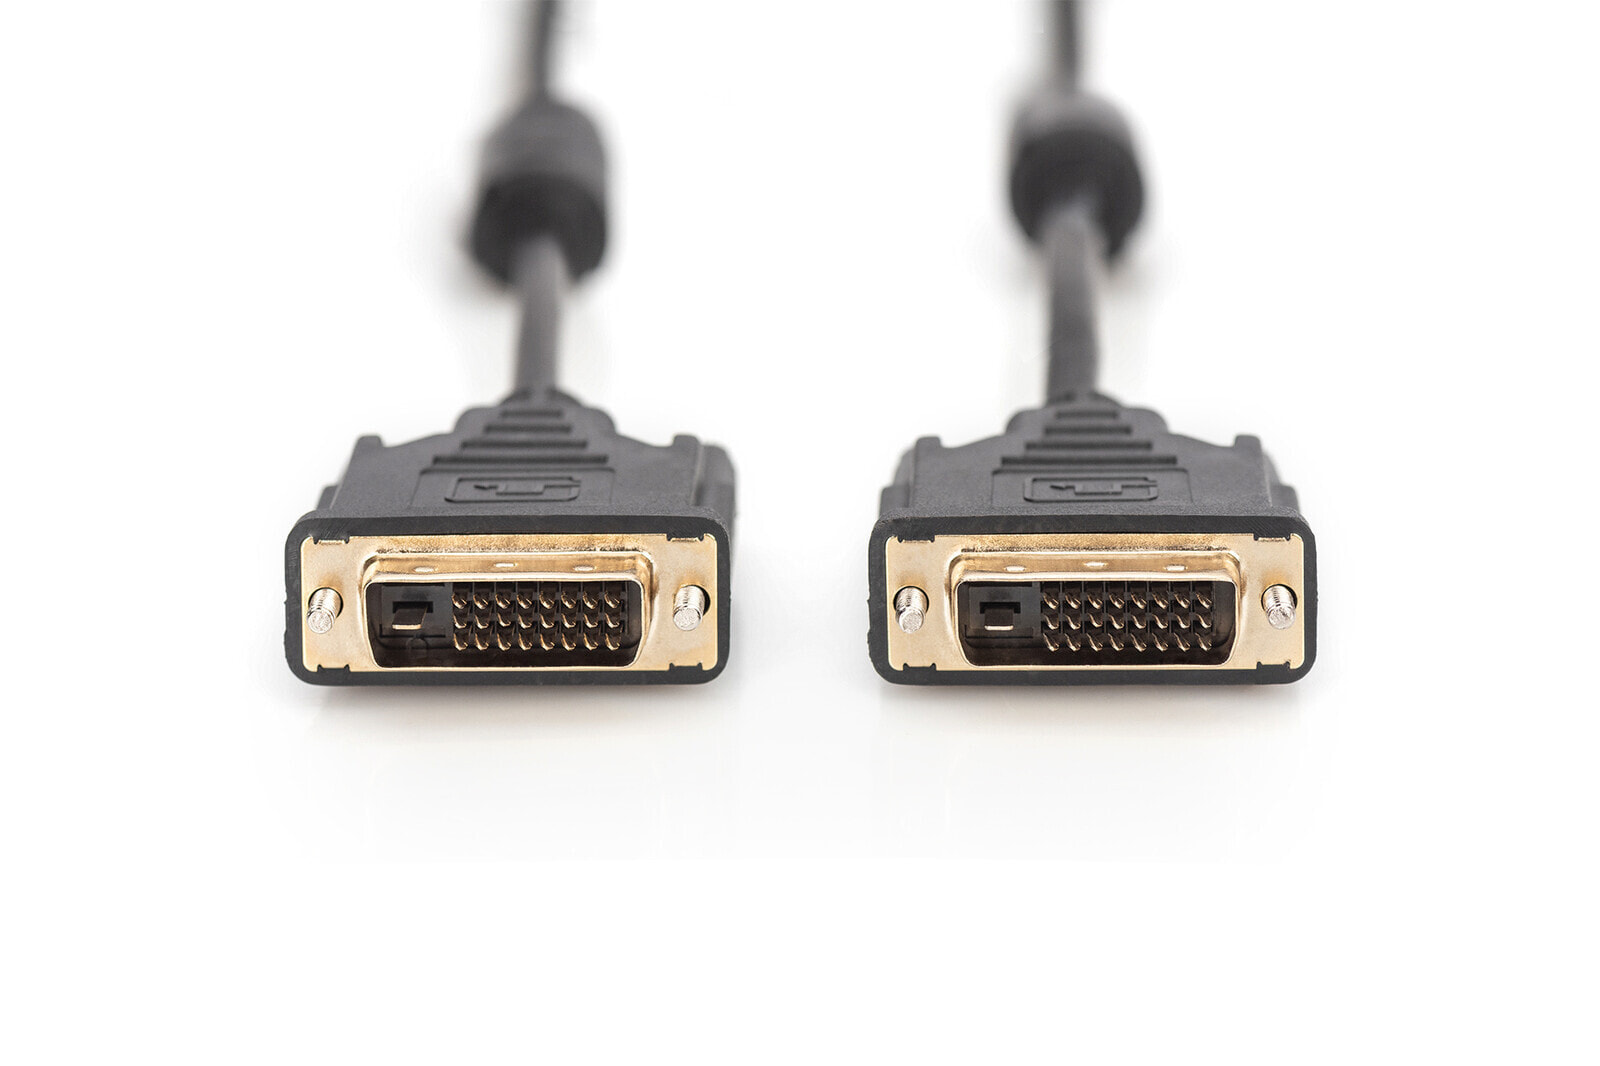 DVI Connection Cable